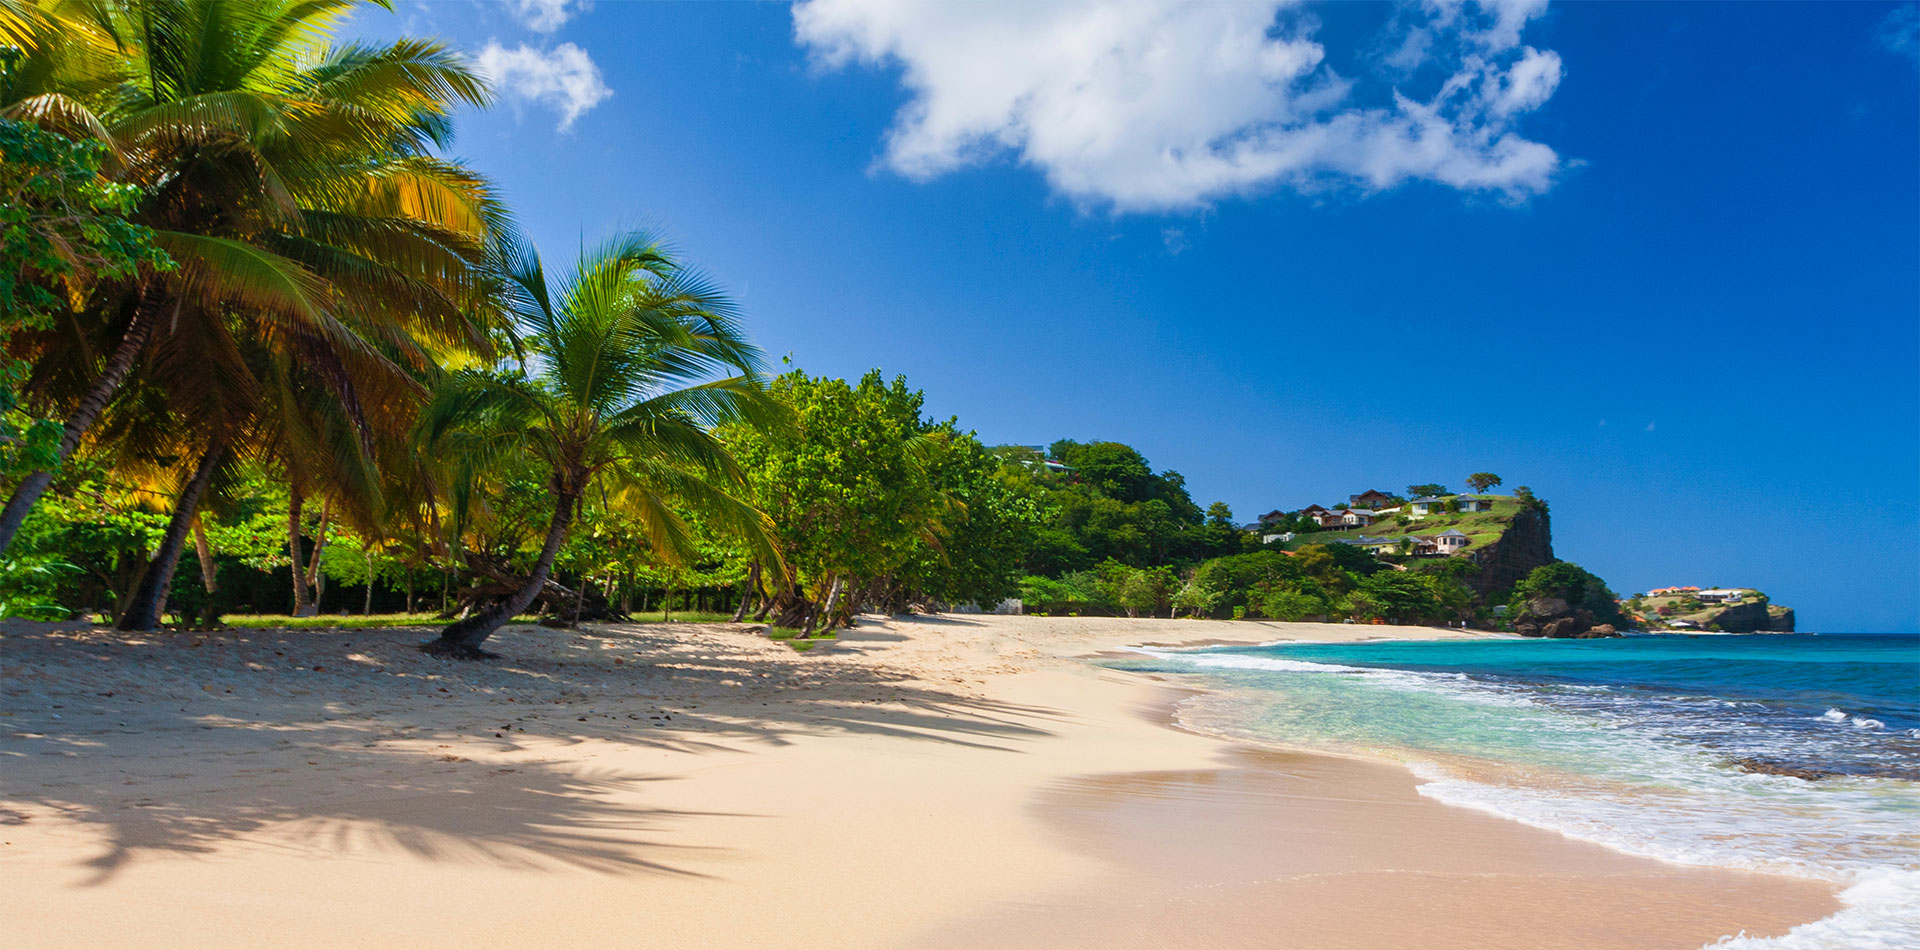 Beautiful beach views in Grenada, Caribbean